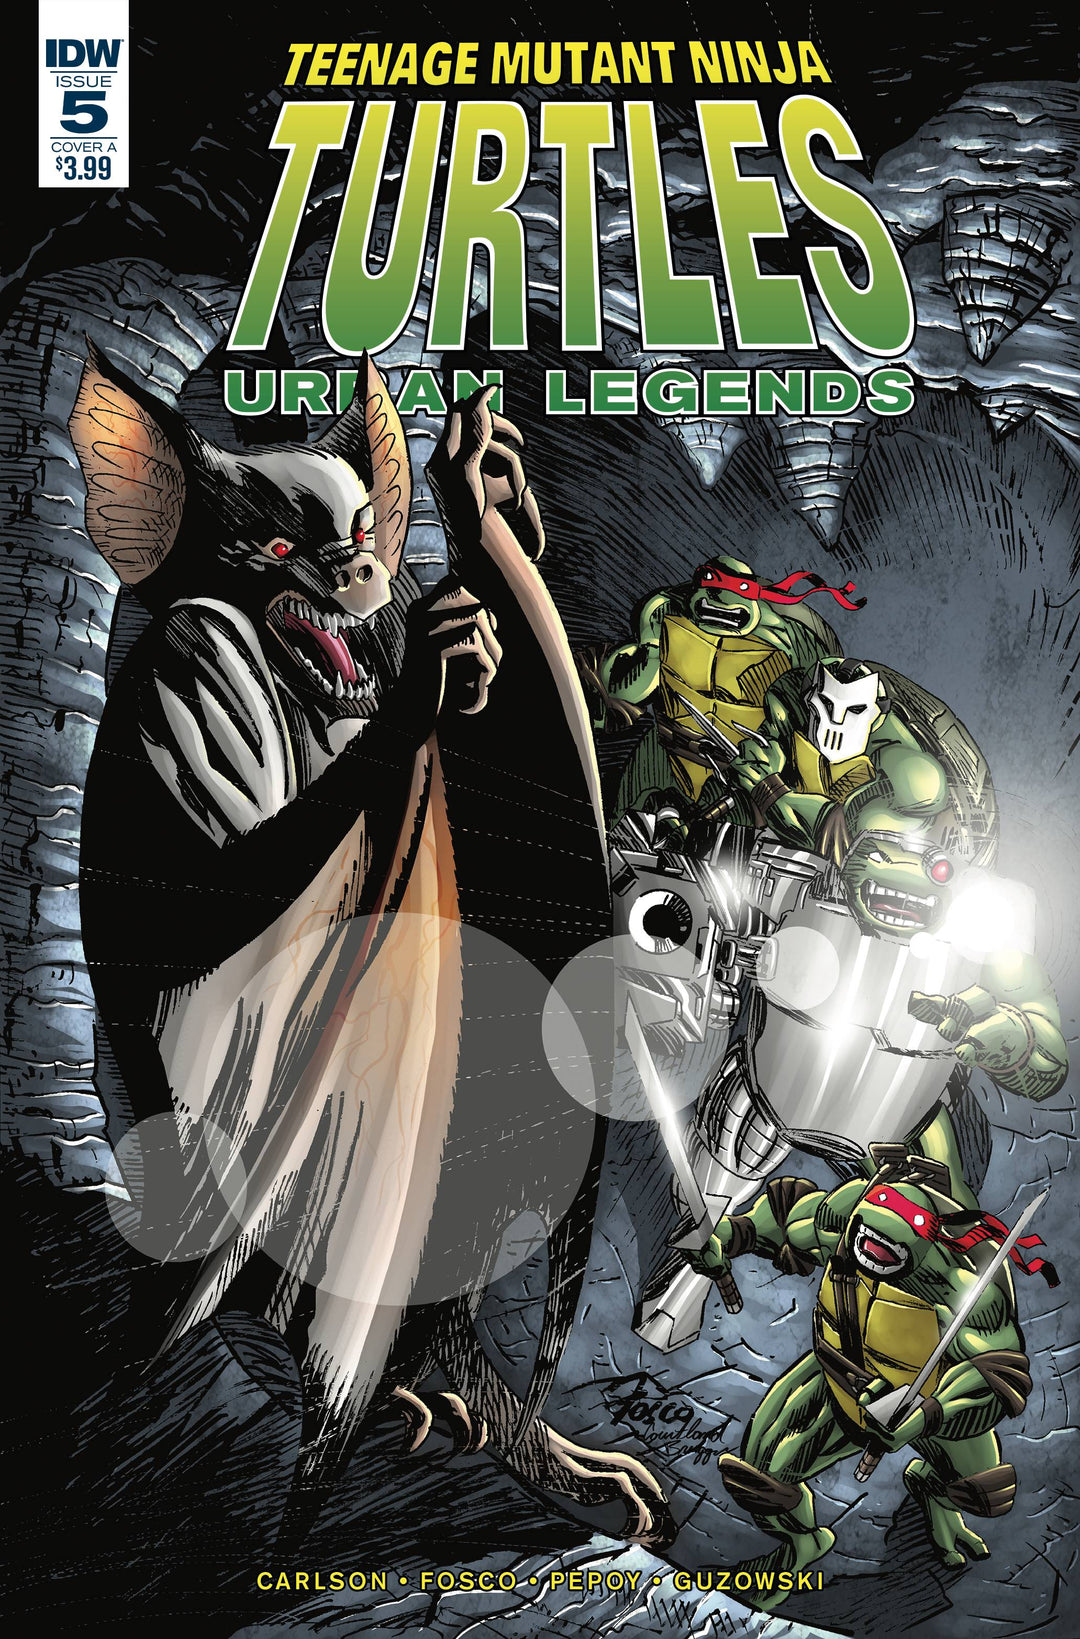 Teenage Mutant Ninja Turtles Urban Legends #5 Cover A Fosco <BINS>